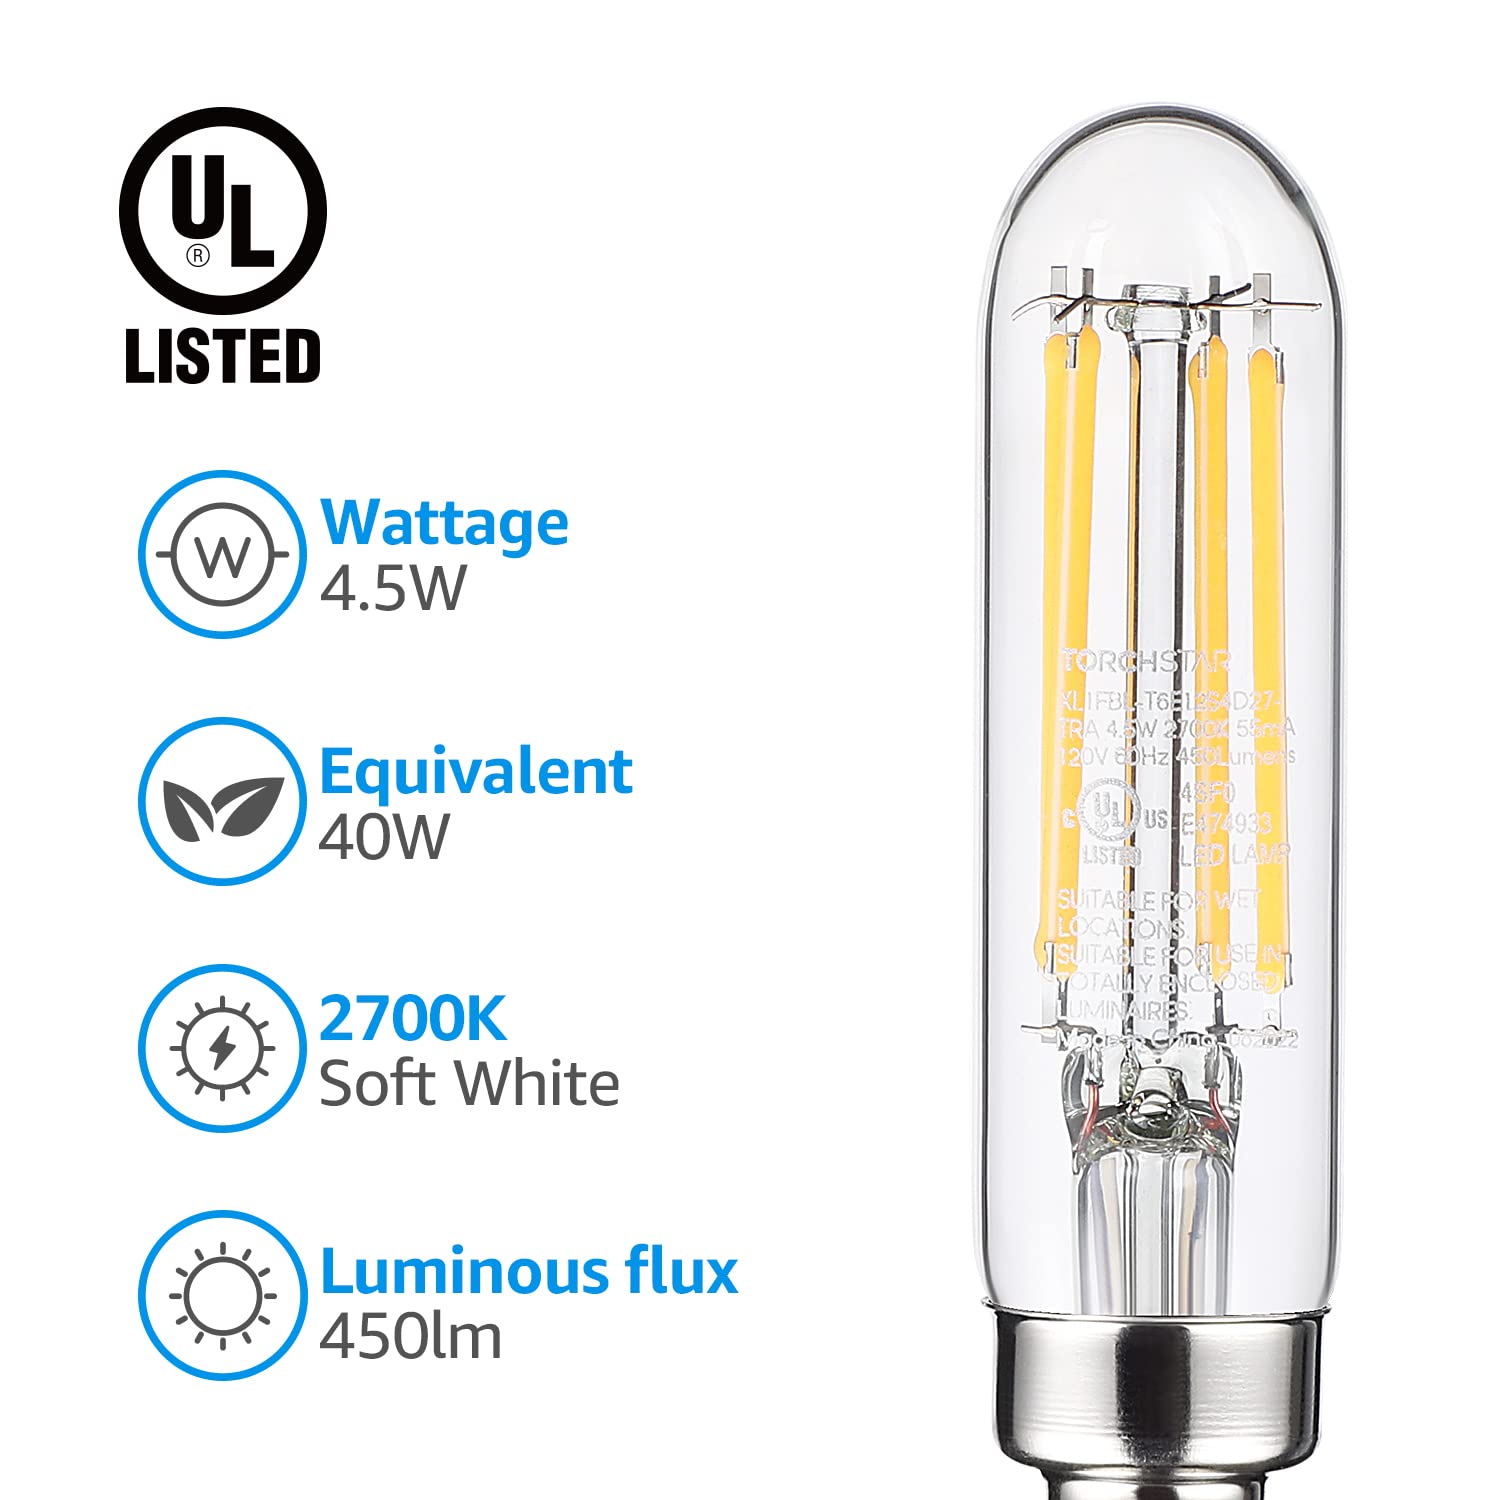 CrystalEra 4.5W T6 LED Vintage Bulbs - E12 Base - 2700K Soft White